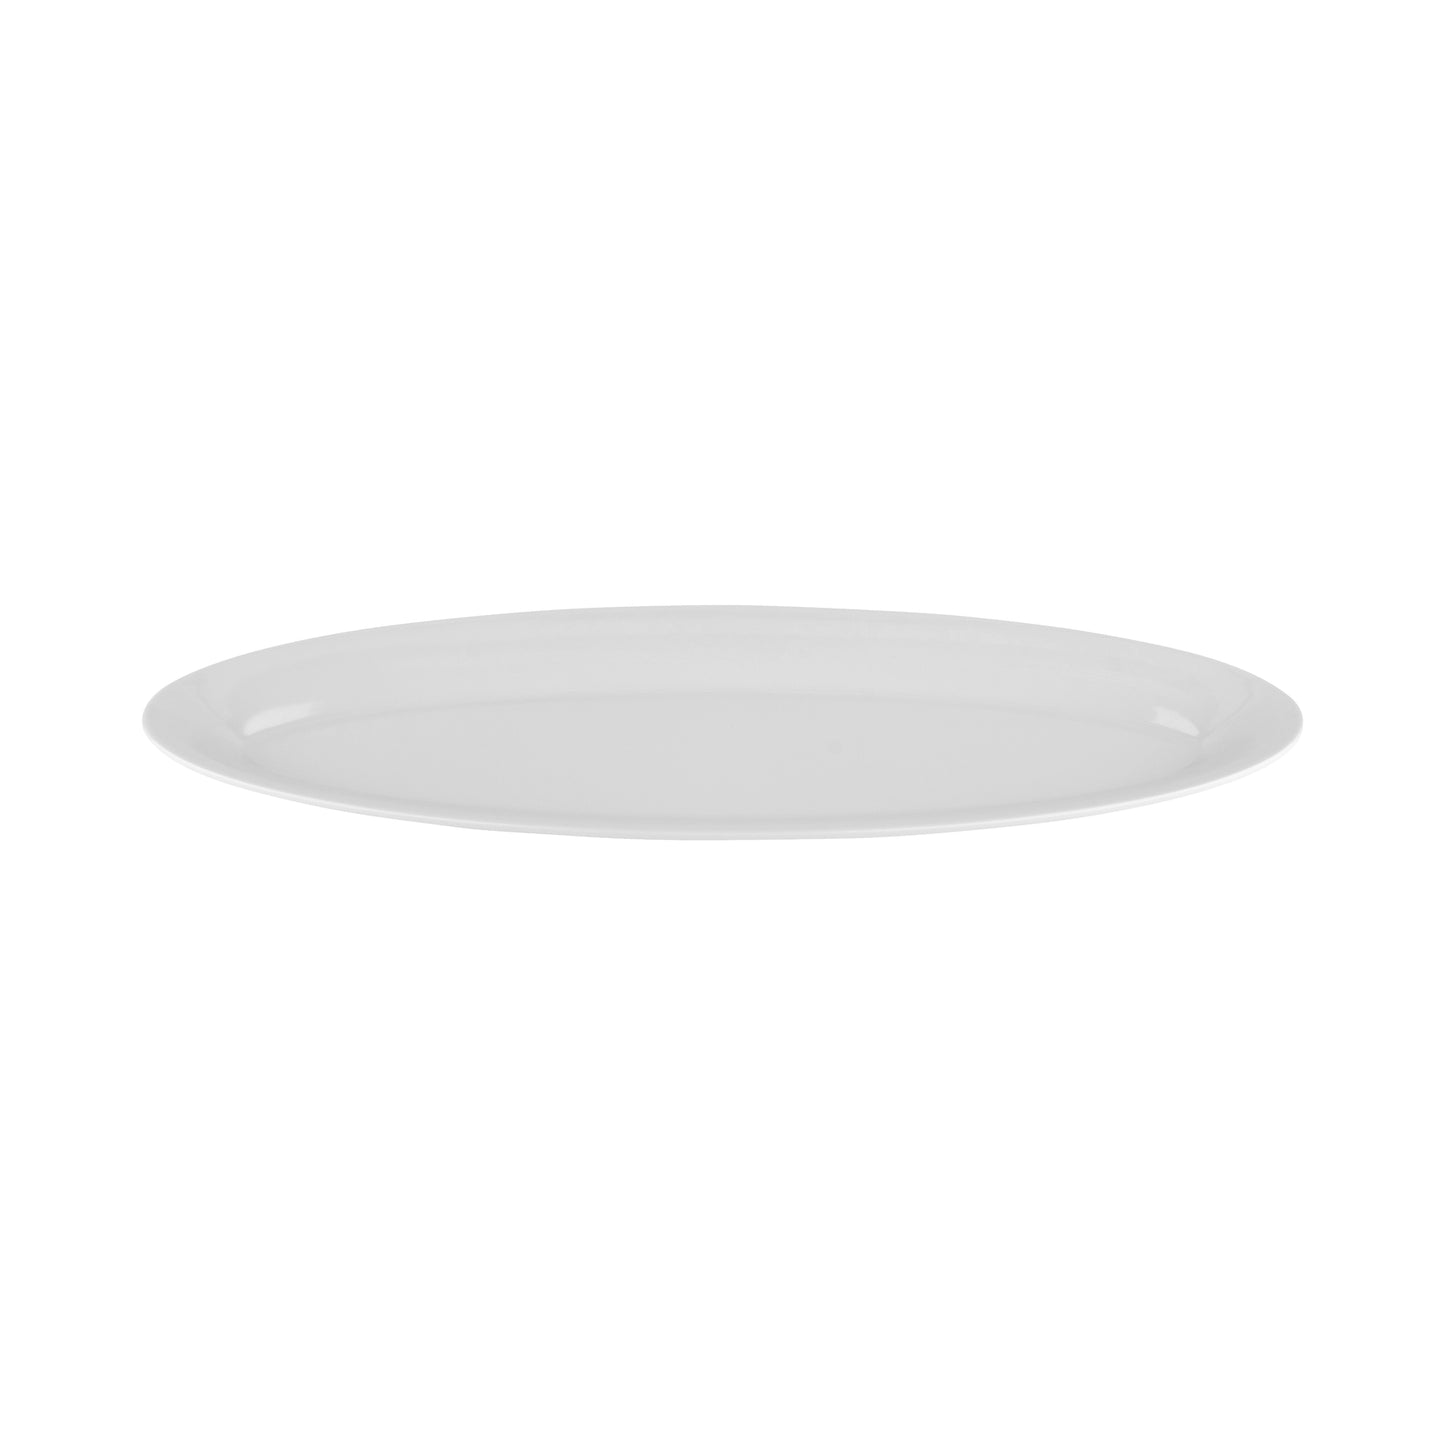 22.5" x 8" Oval Platter